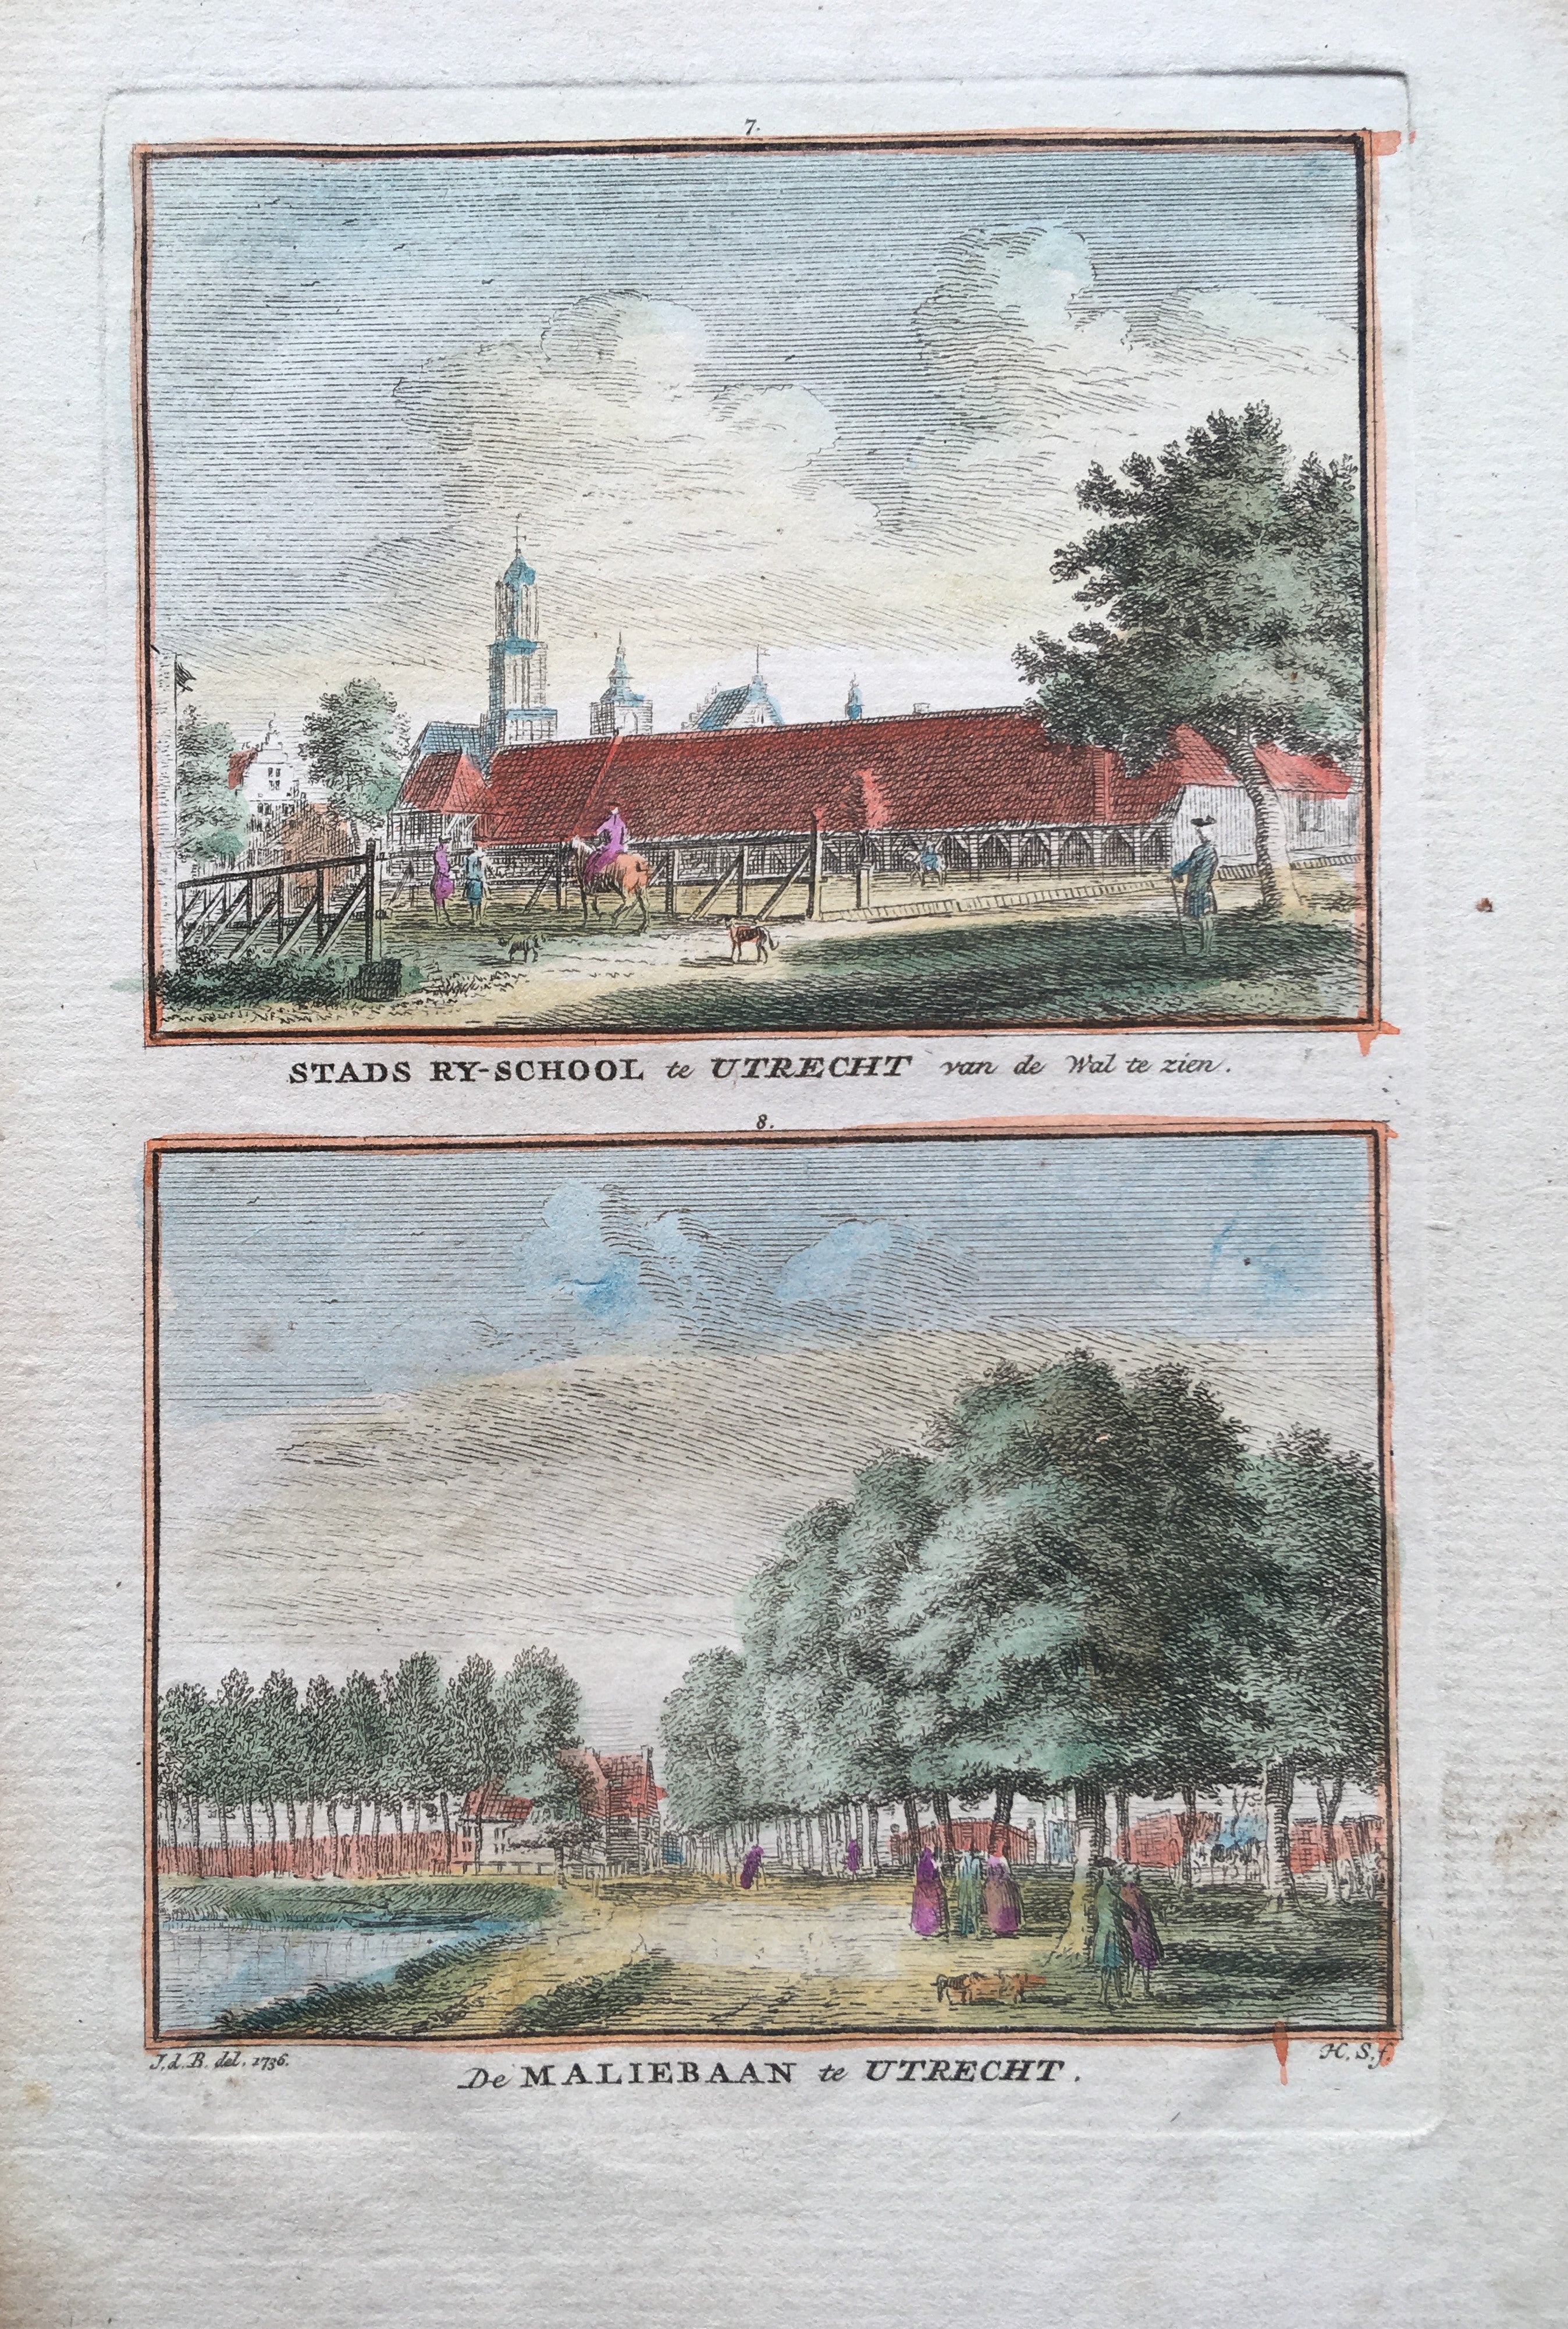 De stads rijschool en de Maliebaan - ca. 1750